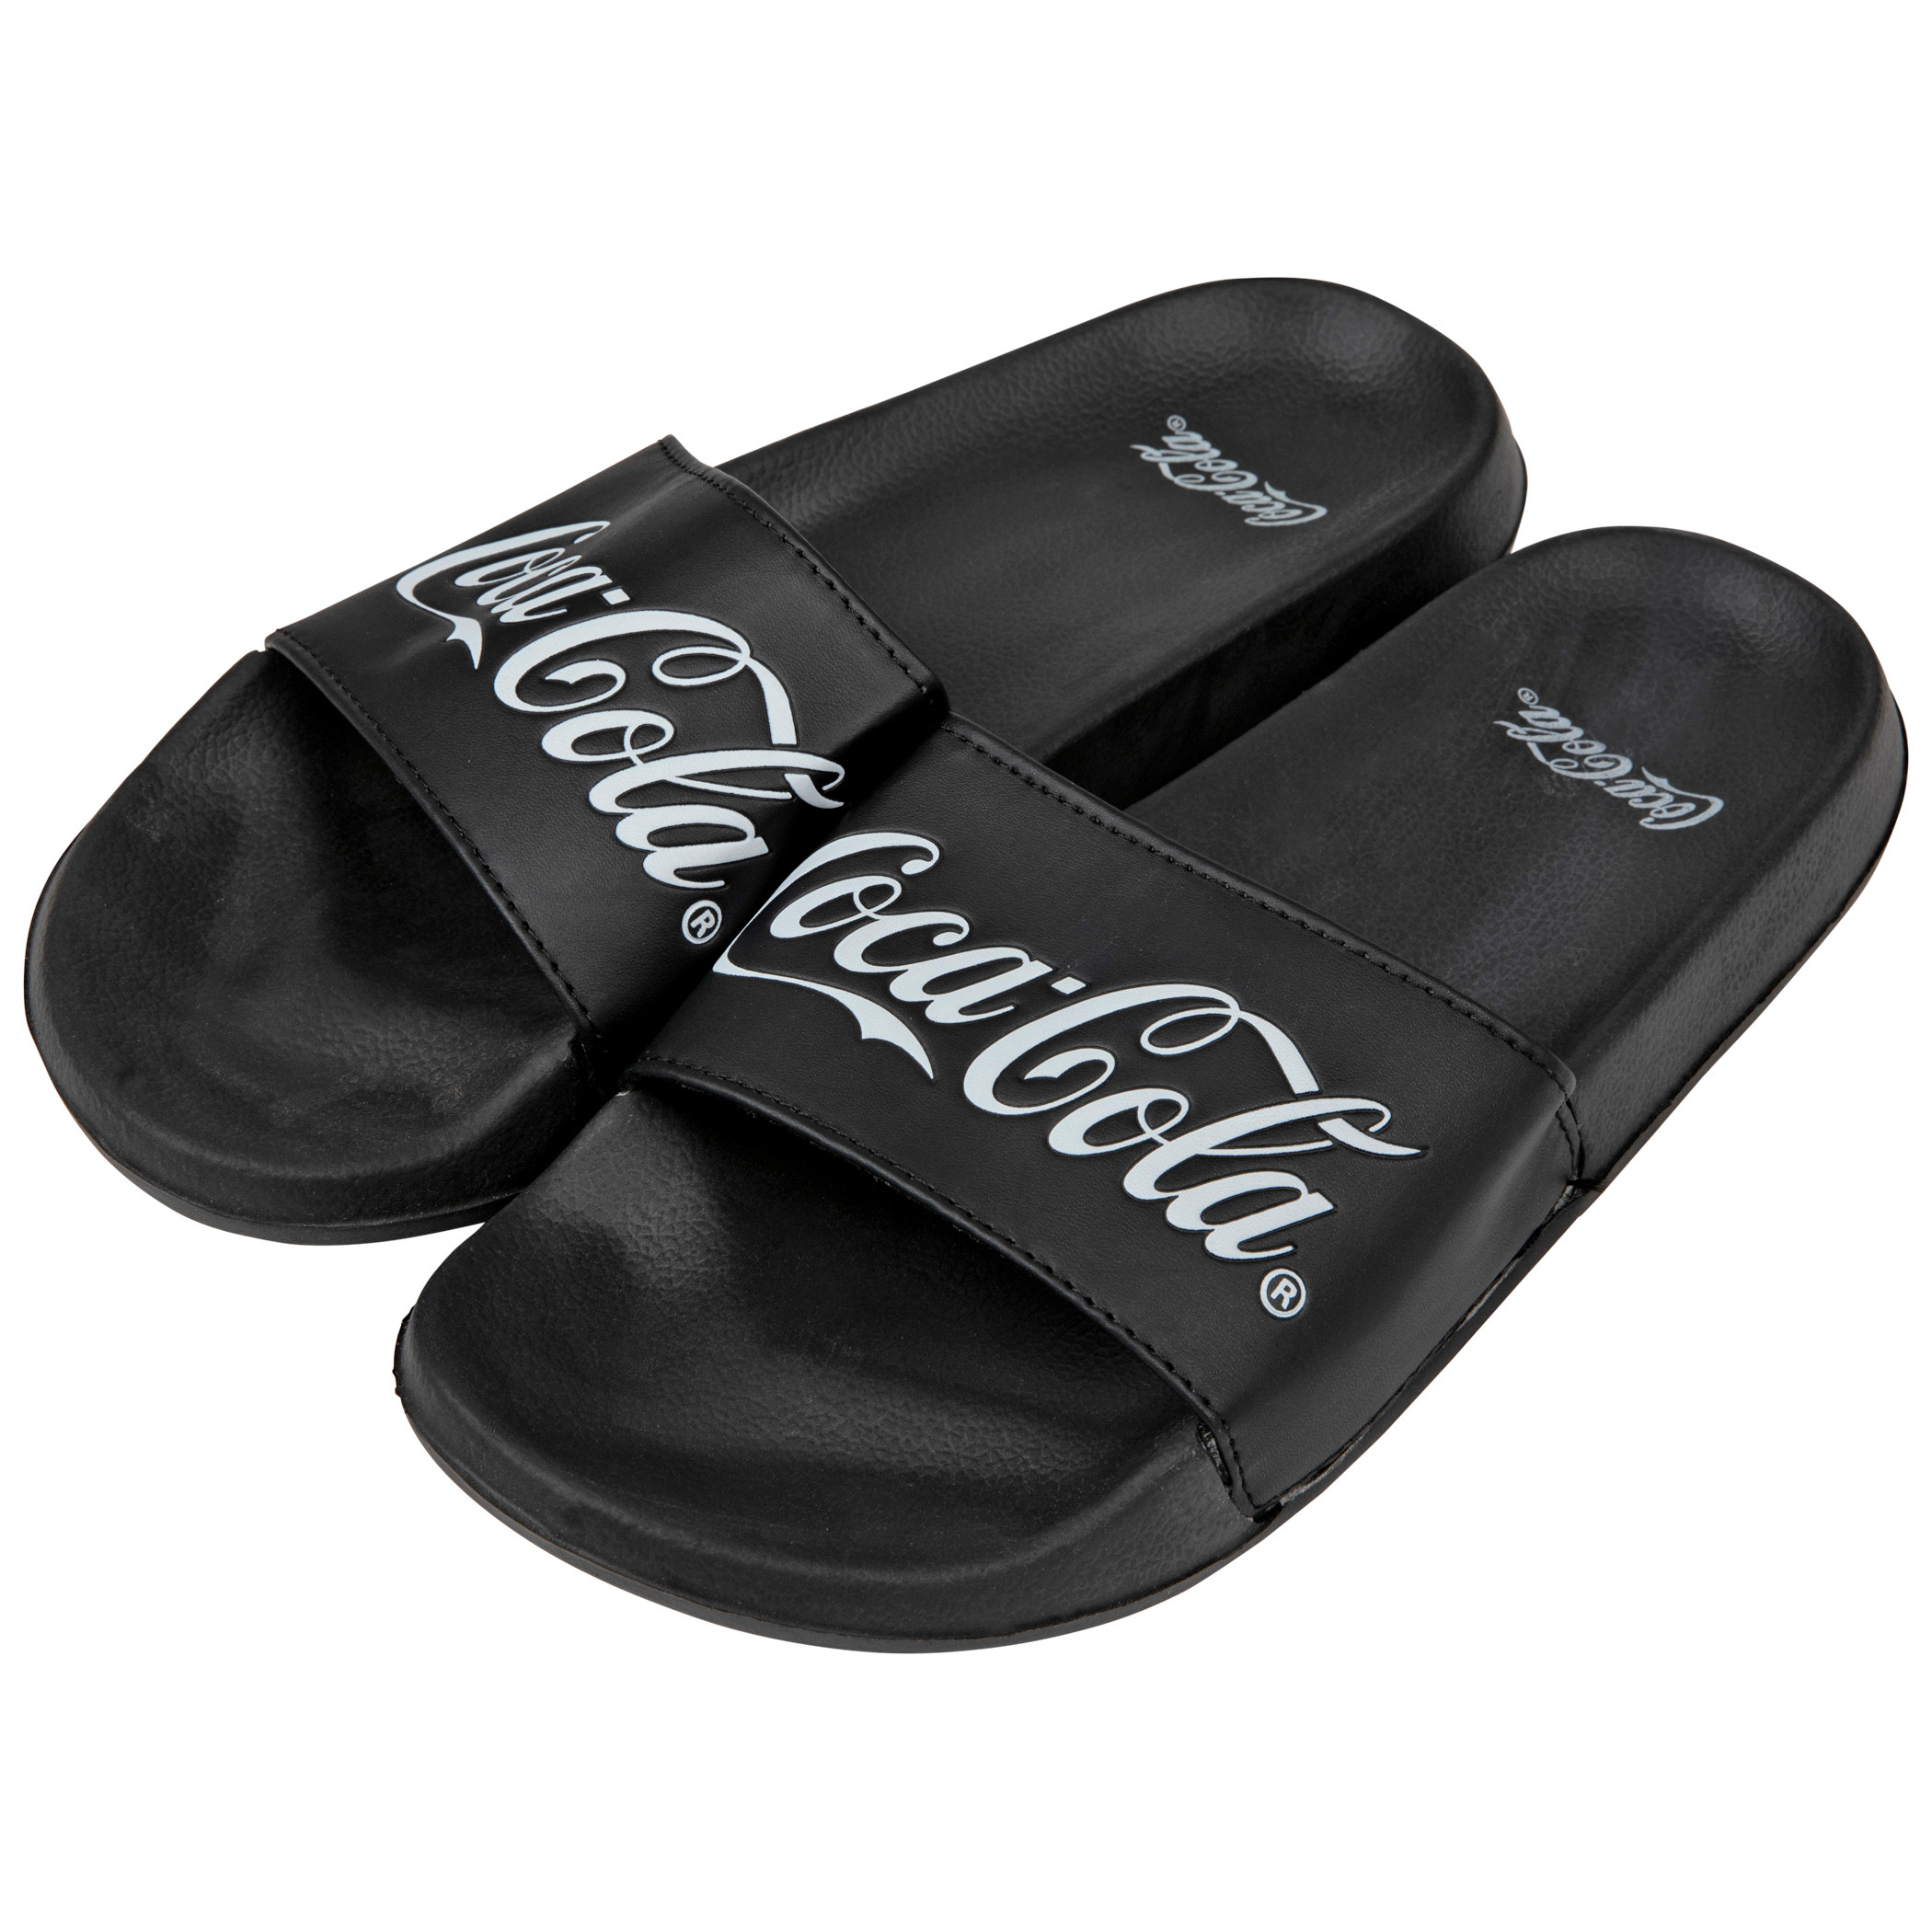 Coca-Cola Brand Black and White Text Logo Slide Sandals